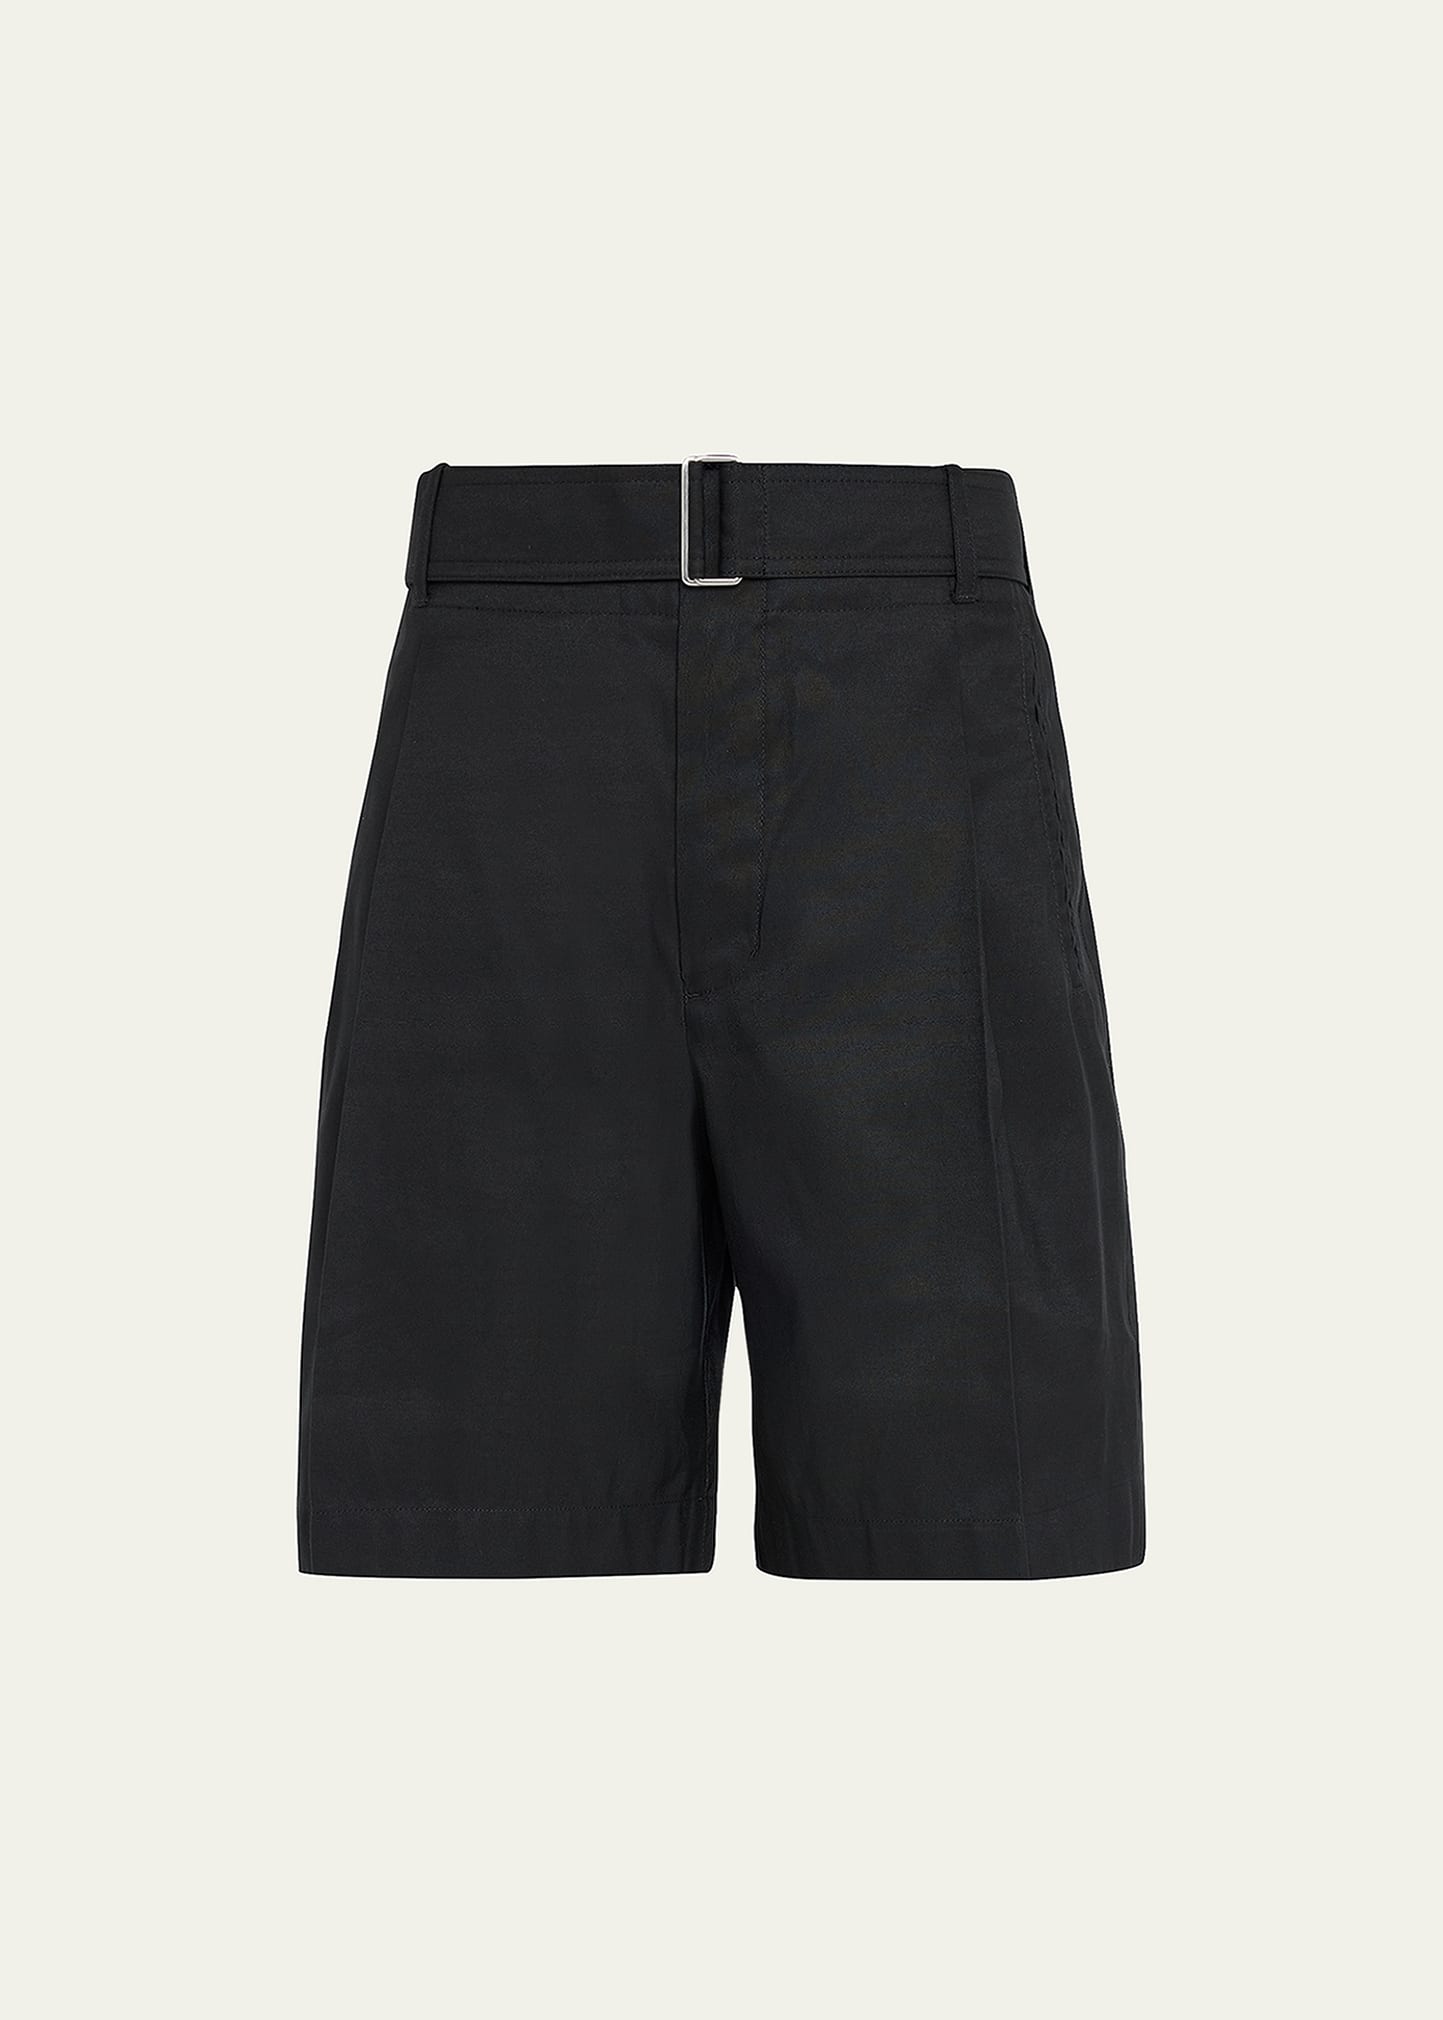 Men's Pleated Self-Belt Tailored Shorts